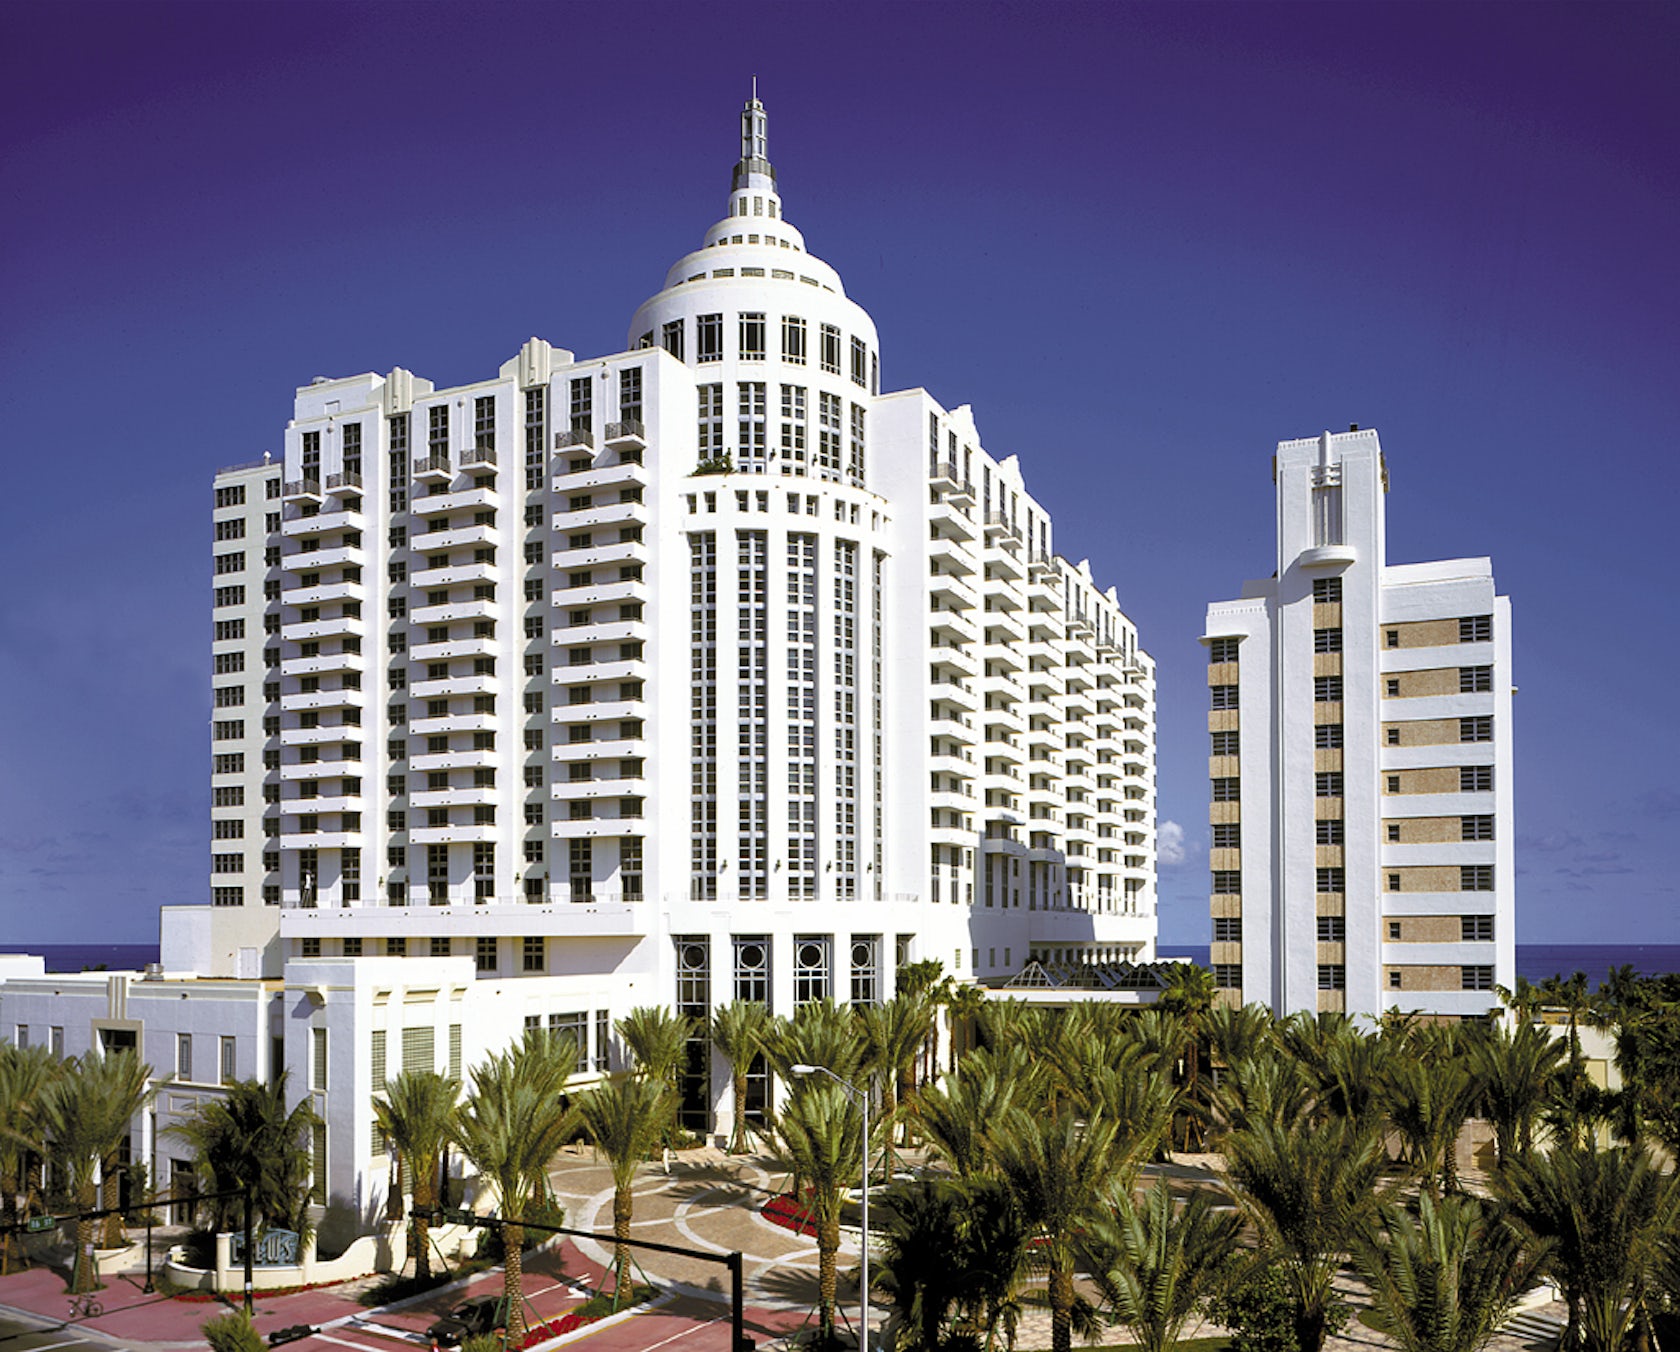 Loews Miami Beach Hotel by Nichols Brosch Wurst Wolfe & Associates